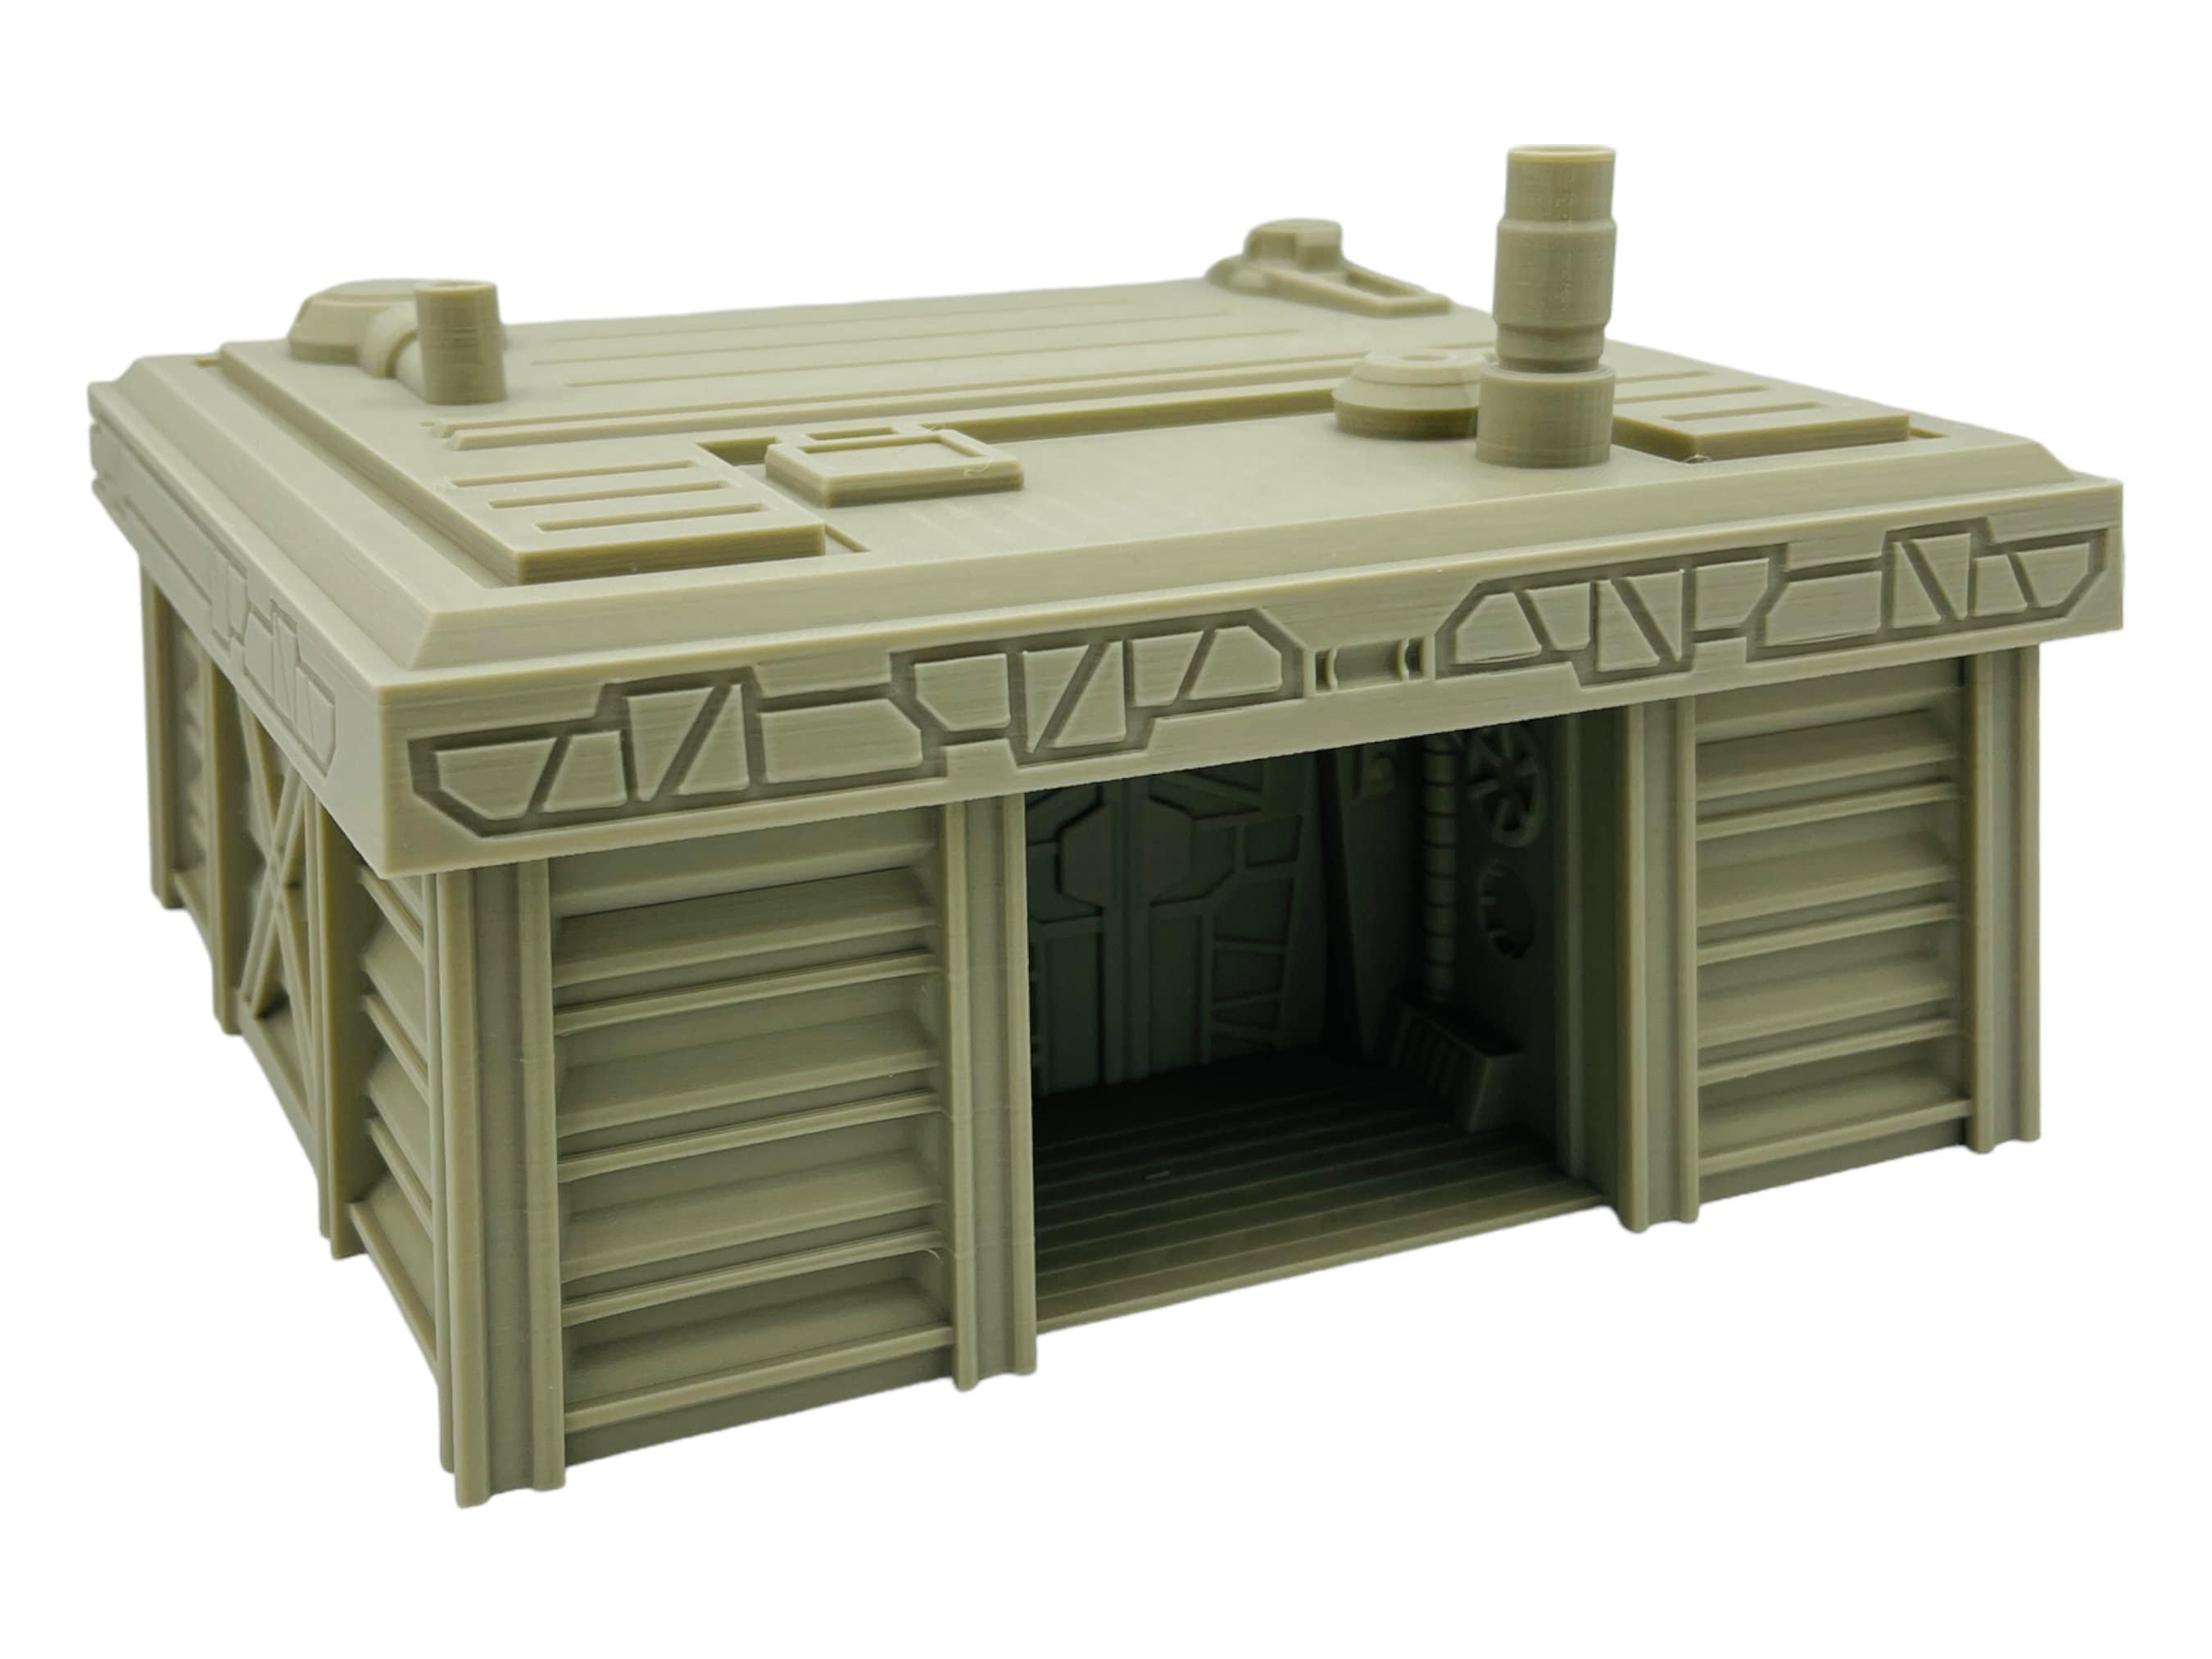 Imperial Bunker w/ Barricades / Txarli Factory / Legion and Wargame 3d Printed Tabletop Terrain / Licensed Printer